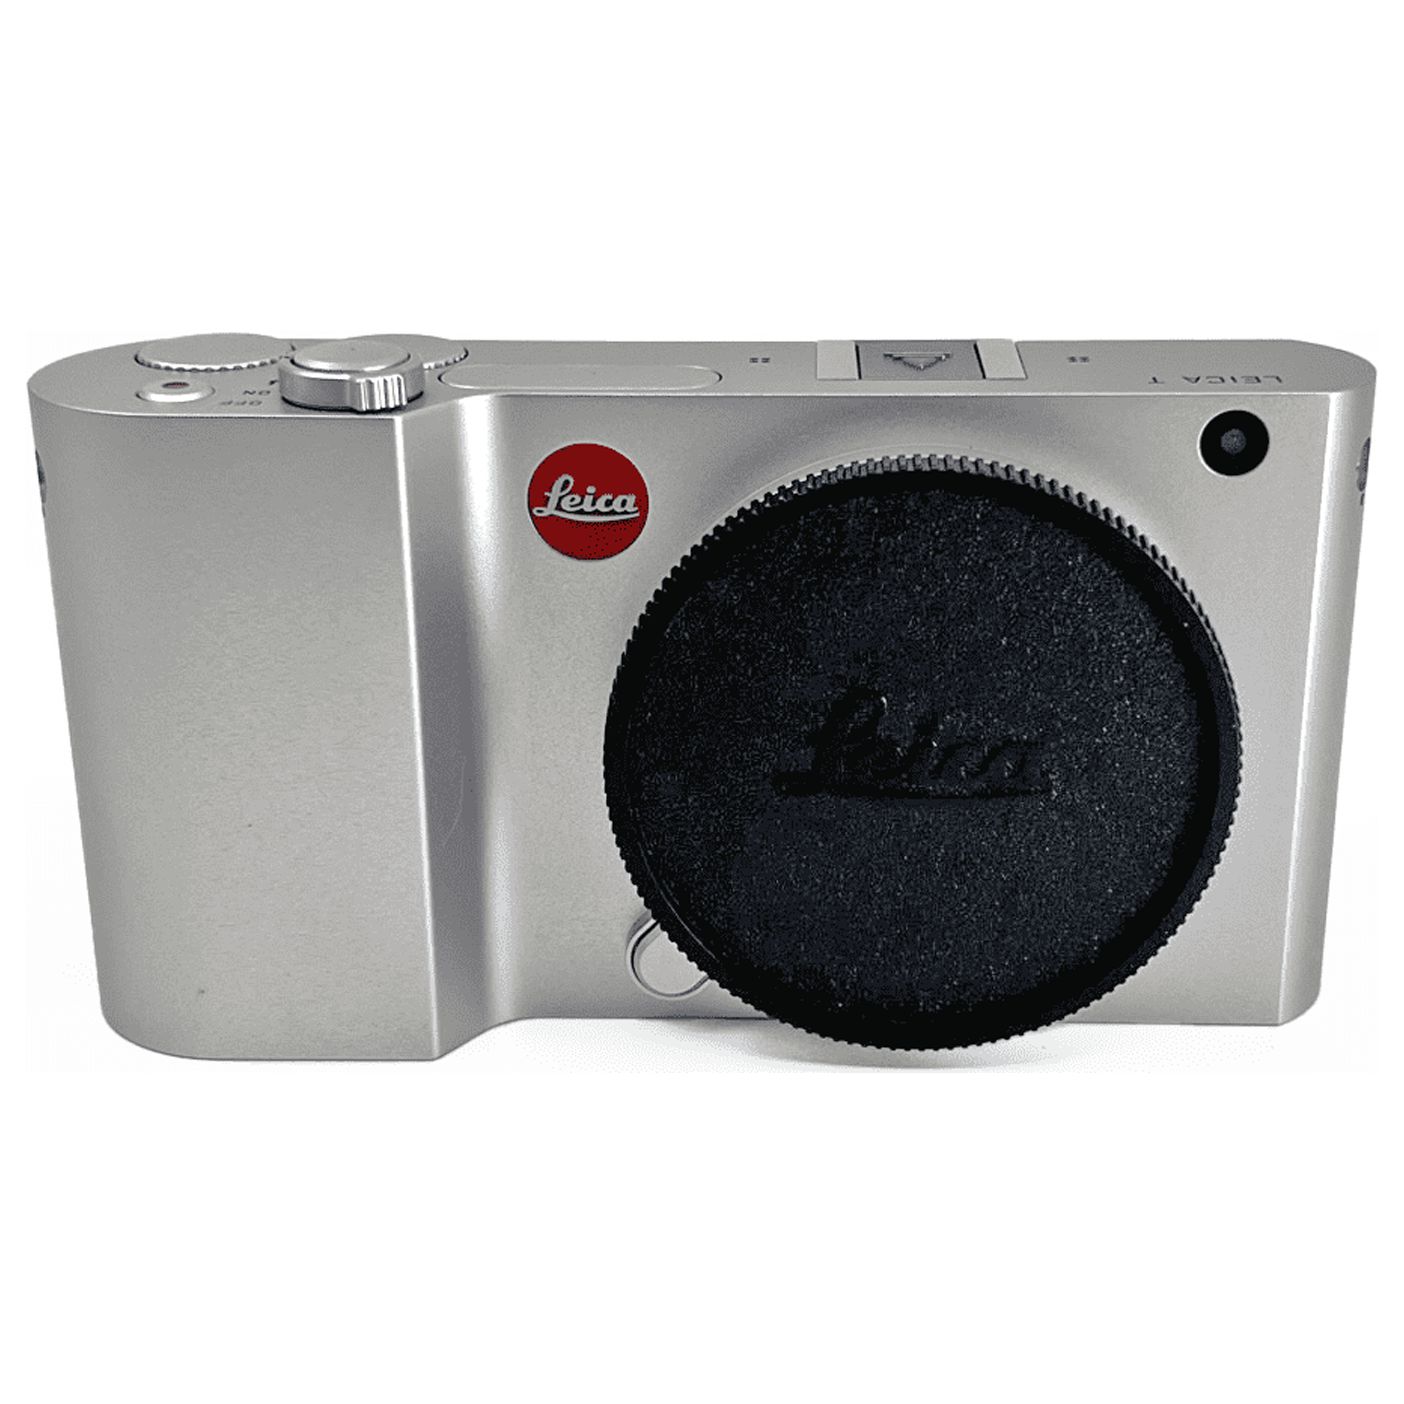 Leica T Mirrorless Digital Camera (Silver) 018-181 - image 4 of 4